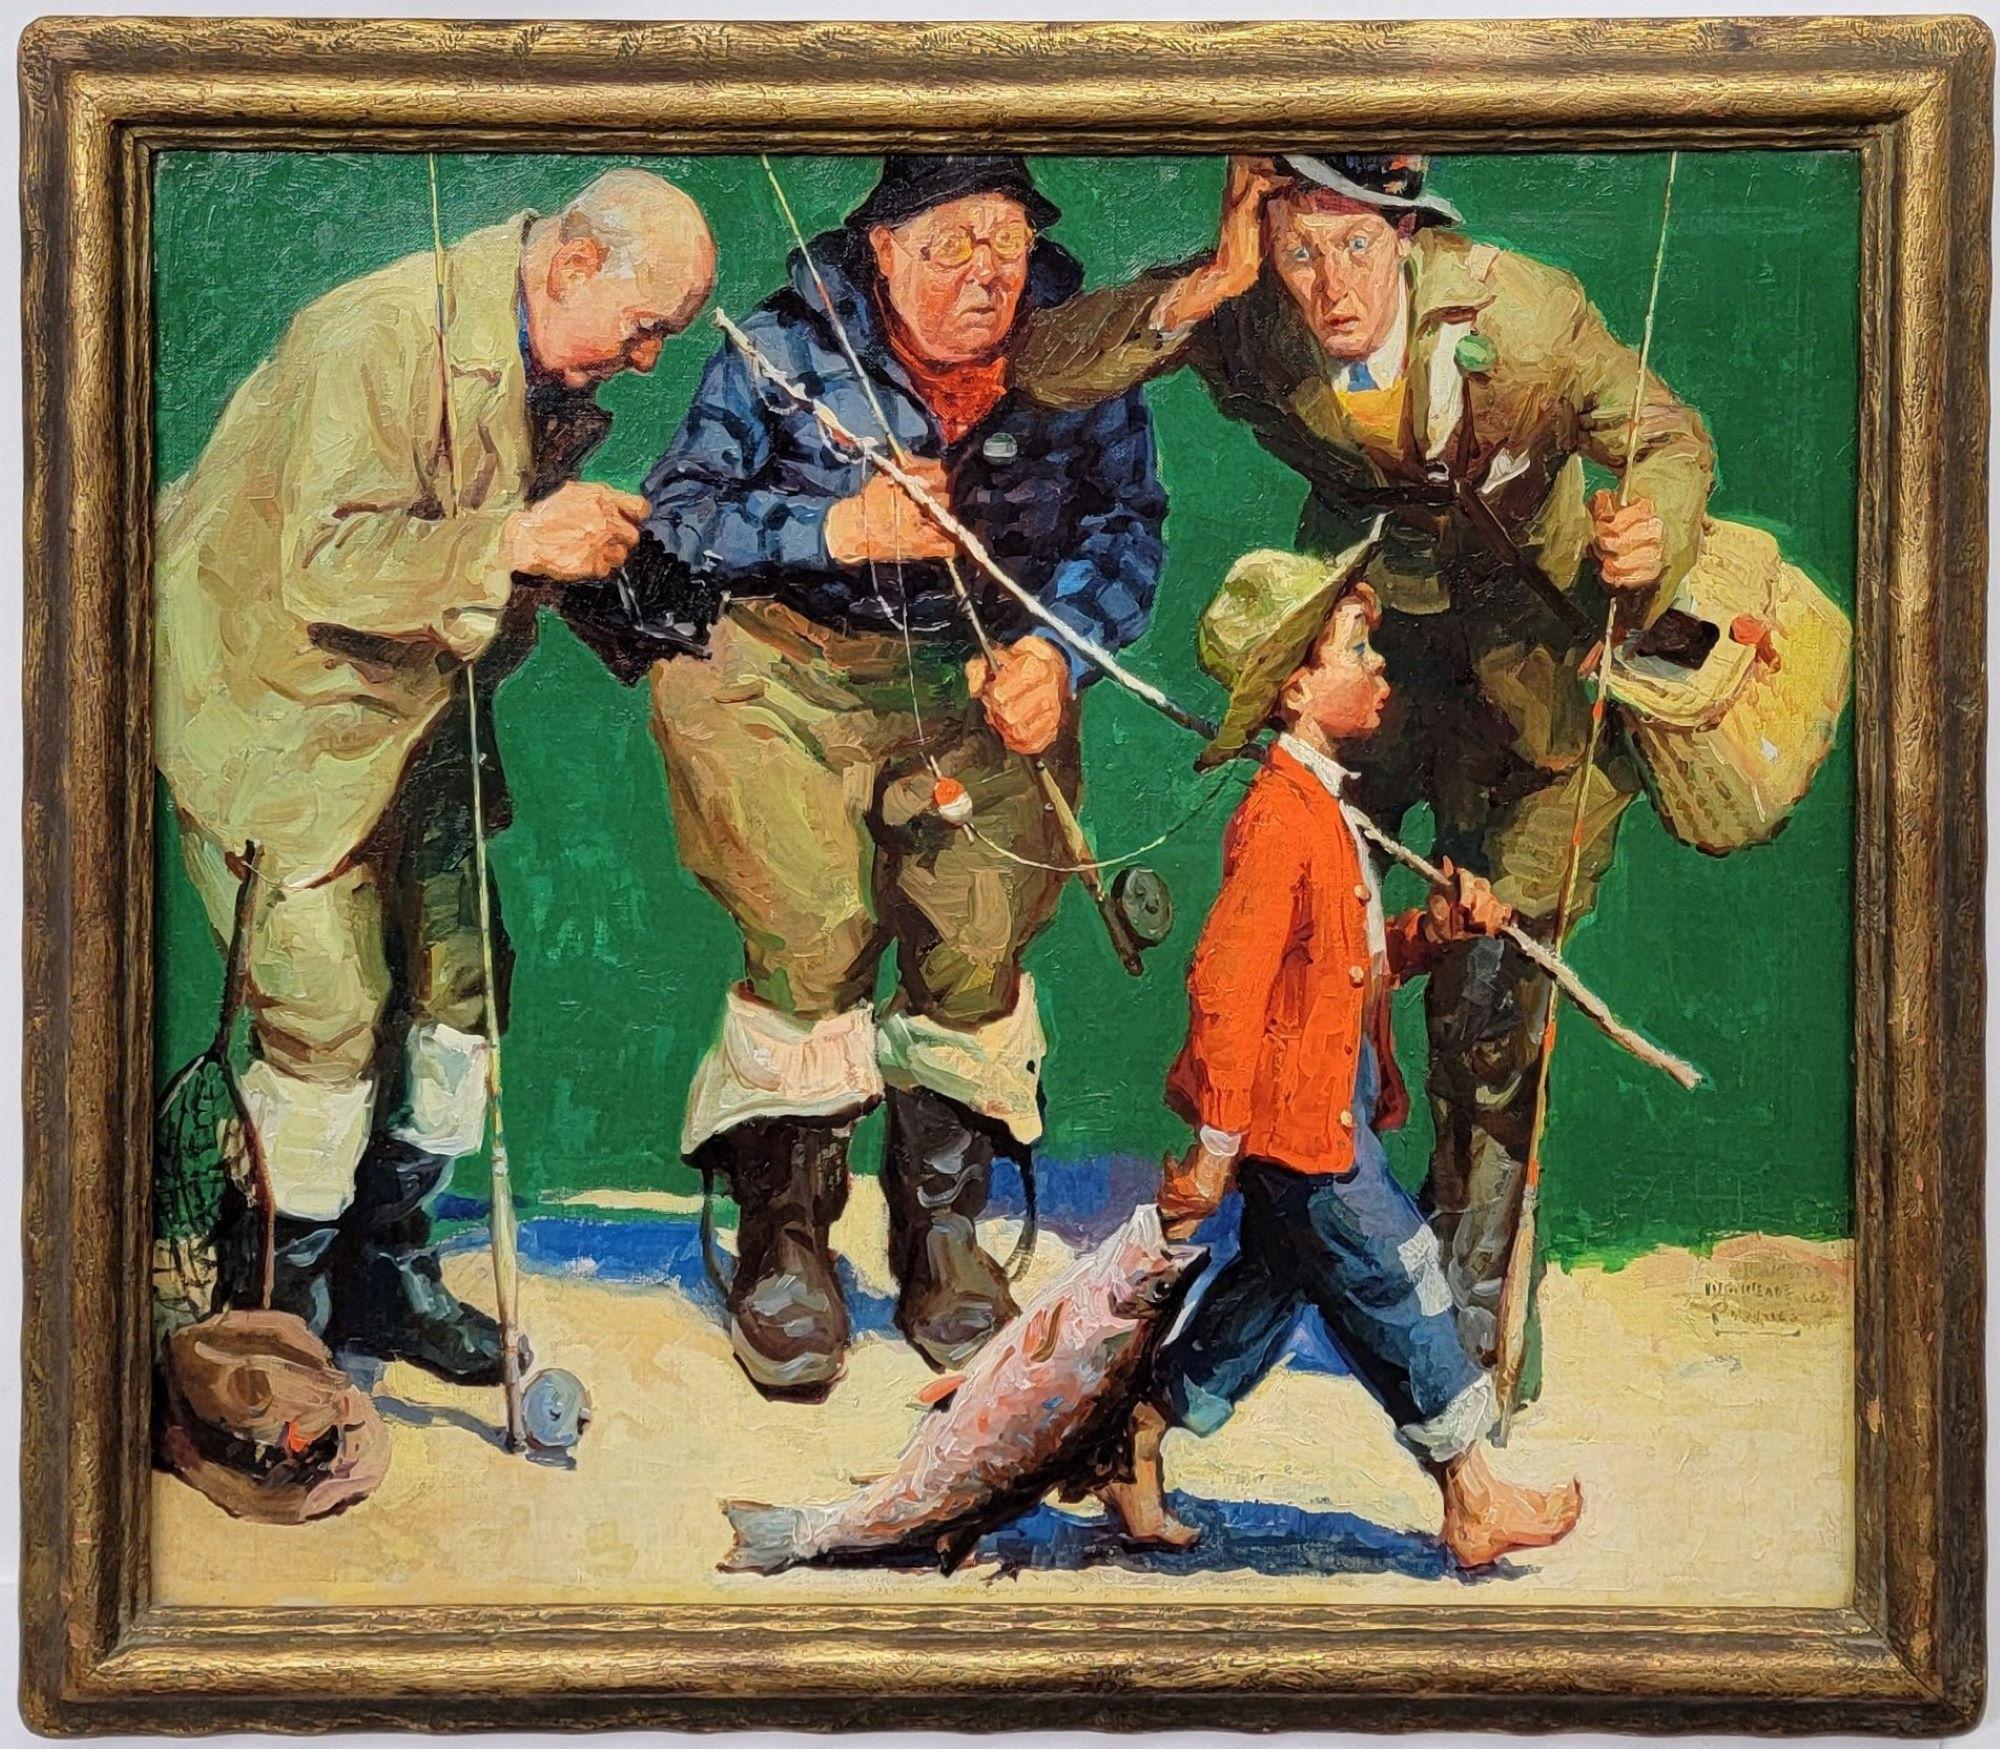 William Meade Prince Animal Painting - Cane Pole Fishing, Original Magazine Cover Art, American Illustration, Sporting